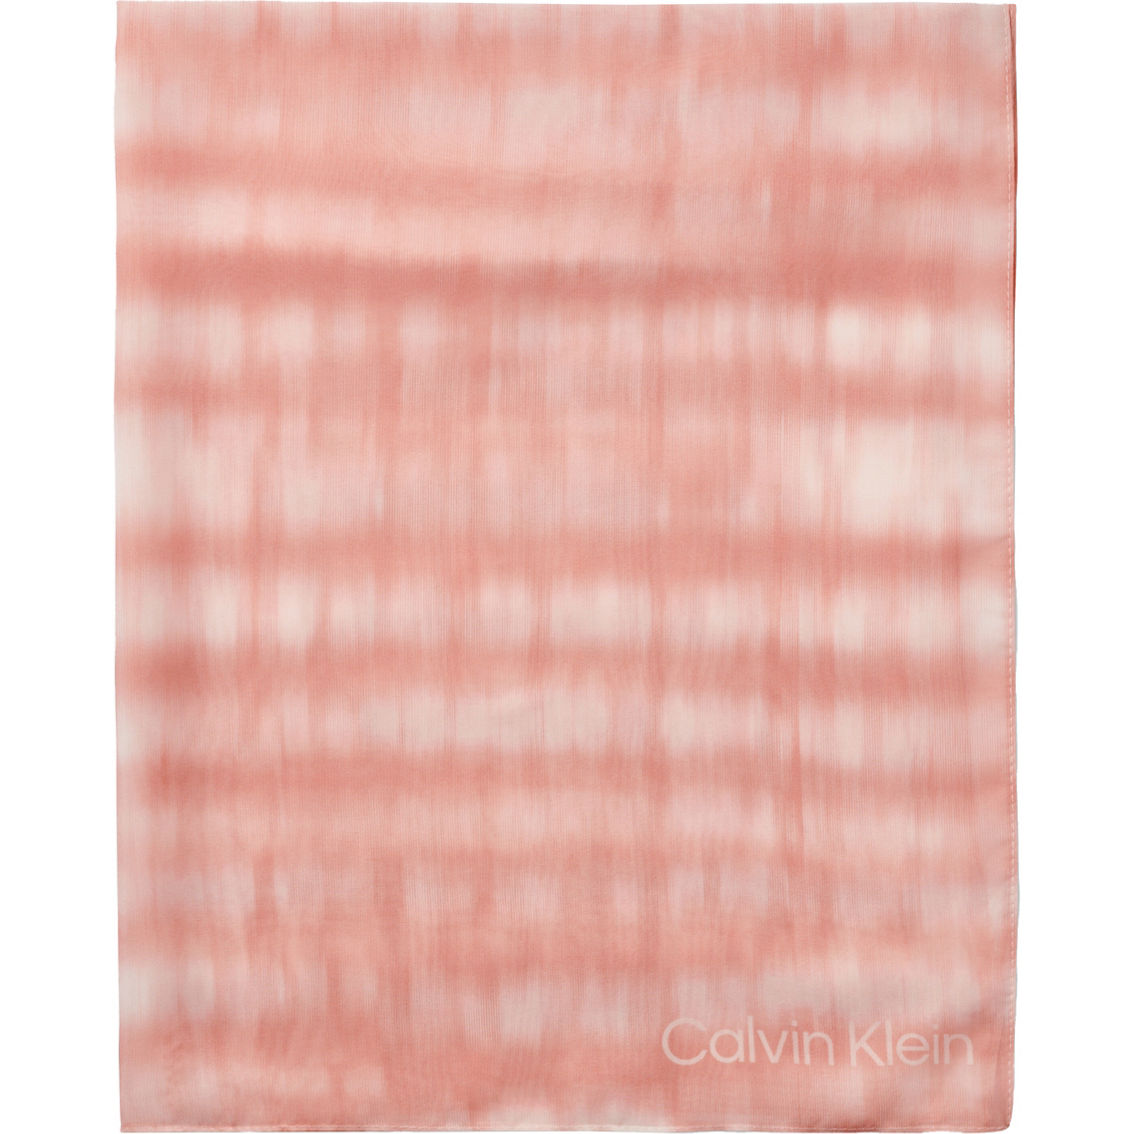 Calvin Klein Watercolor Chiffon Scarf - Image 3 of 3